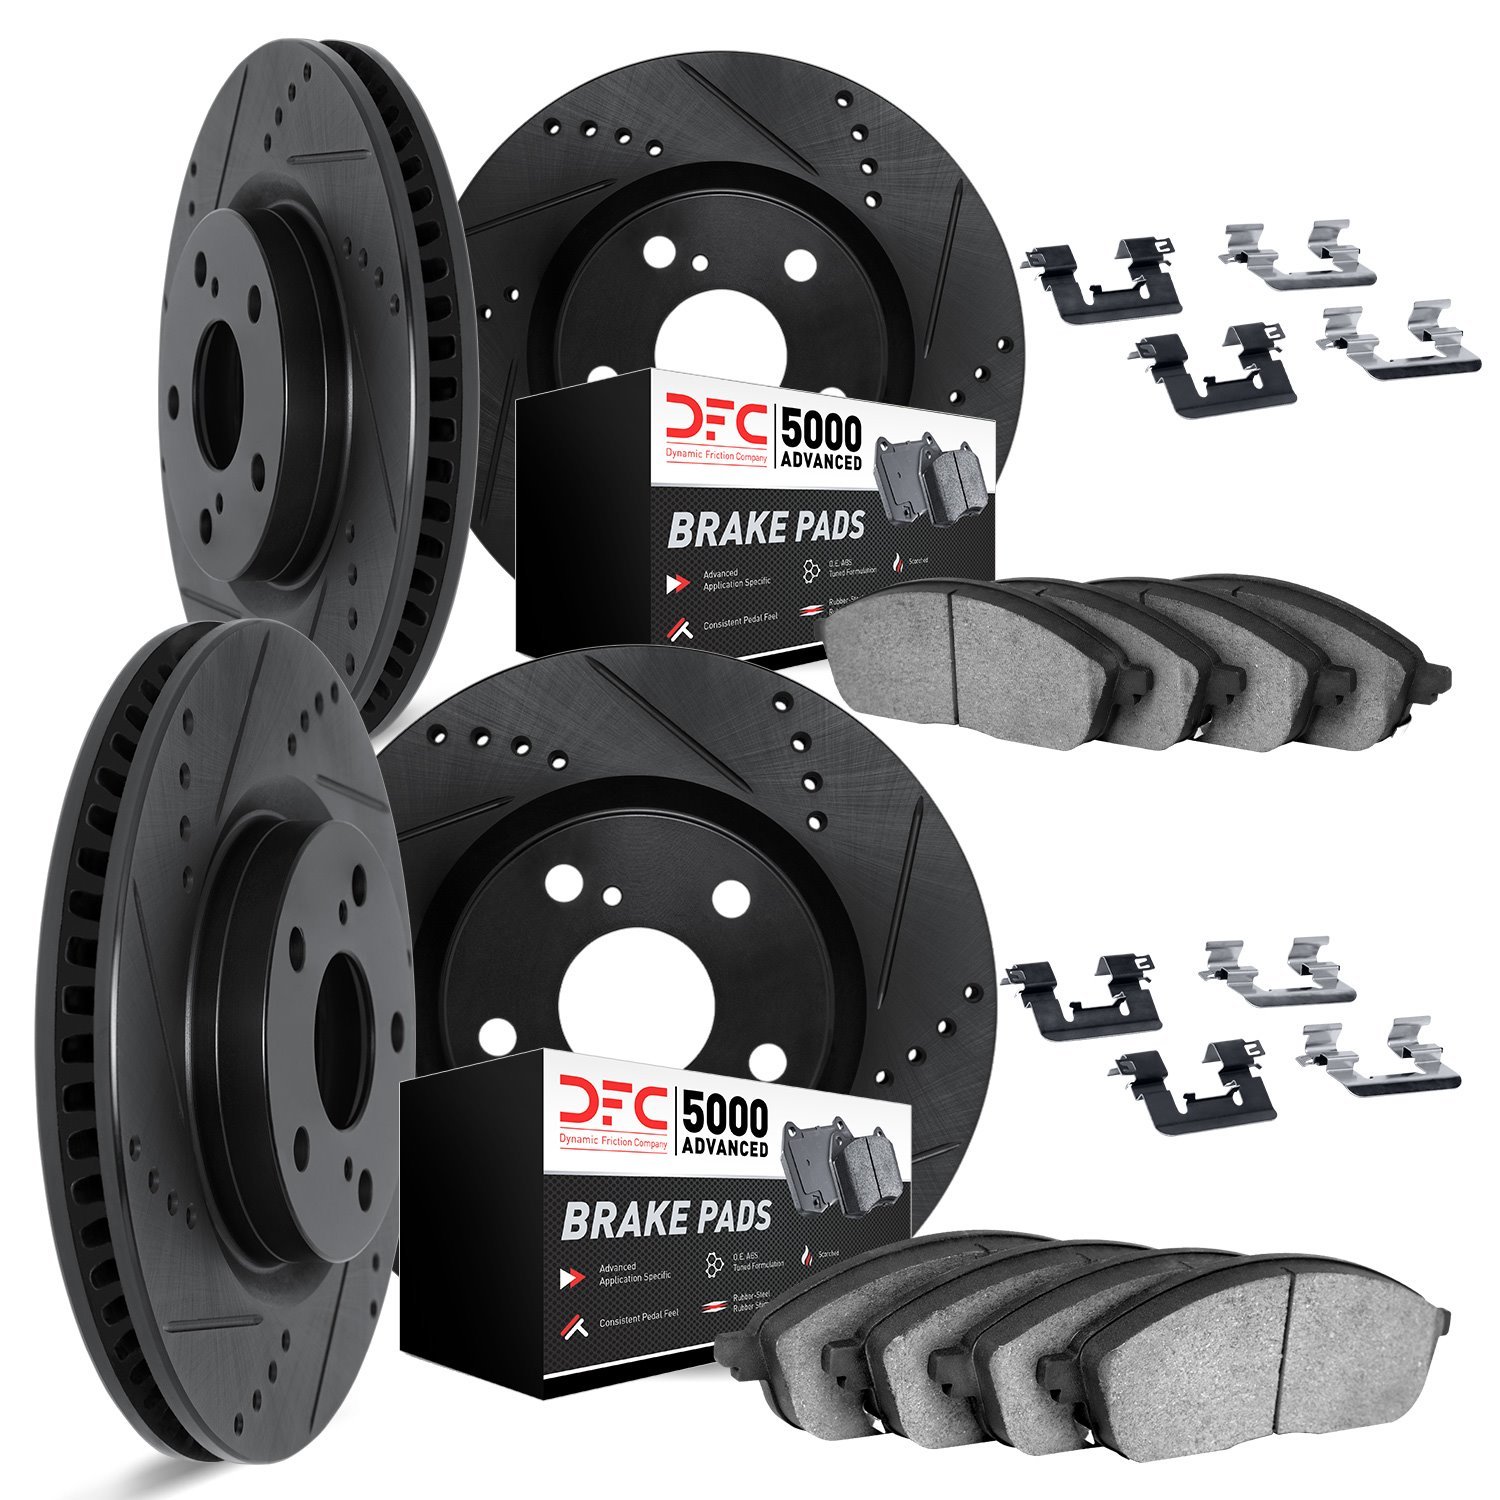 8514-42009 Drilled/Slotted Brake Rotors w/5000 Advanced Brake Pads Kit & Hardware [Black], 2006-2010 Mopar, Position: Front and